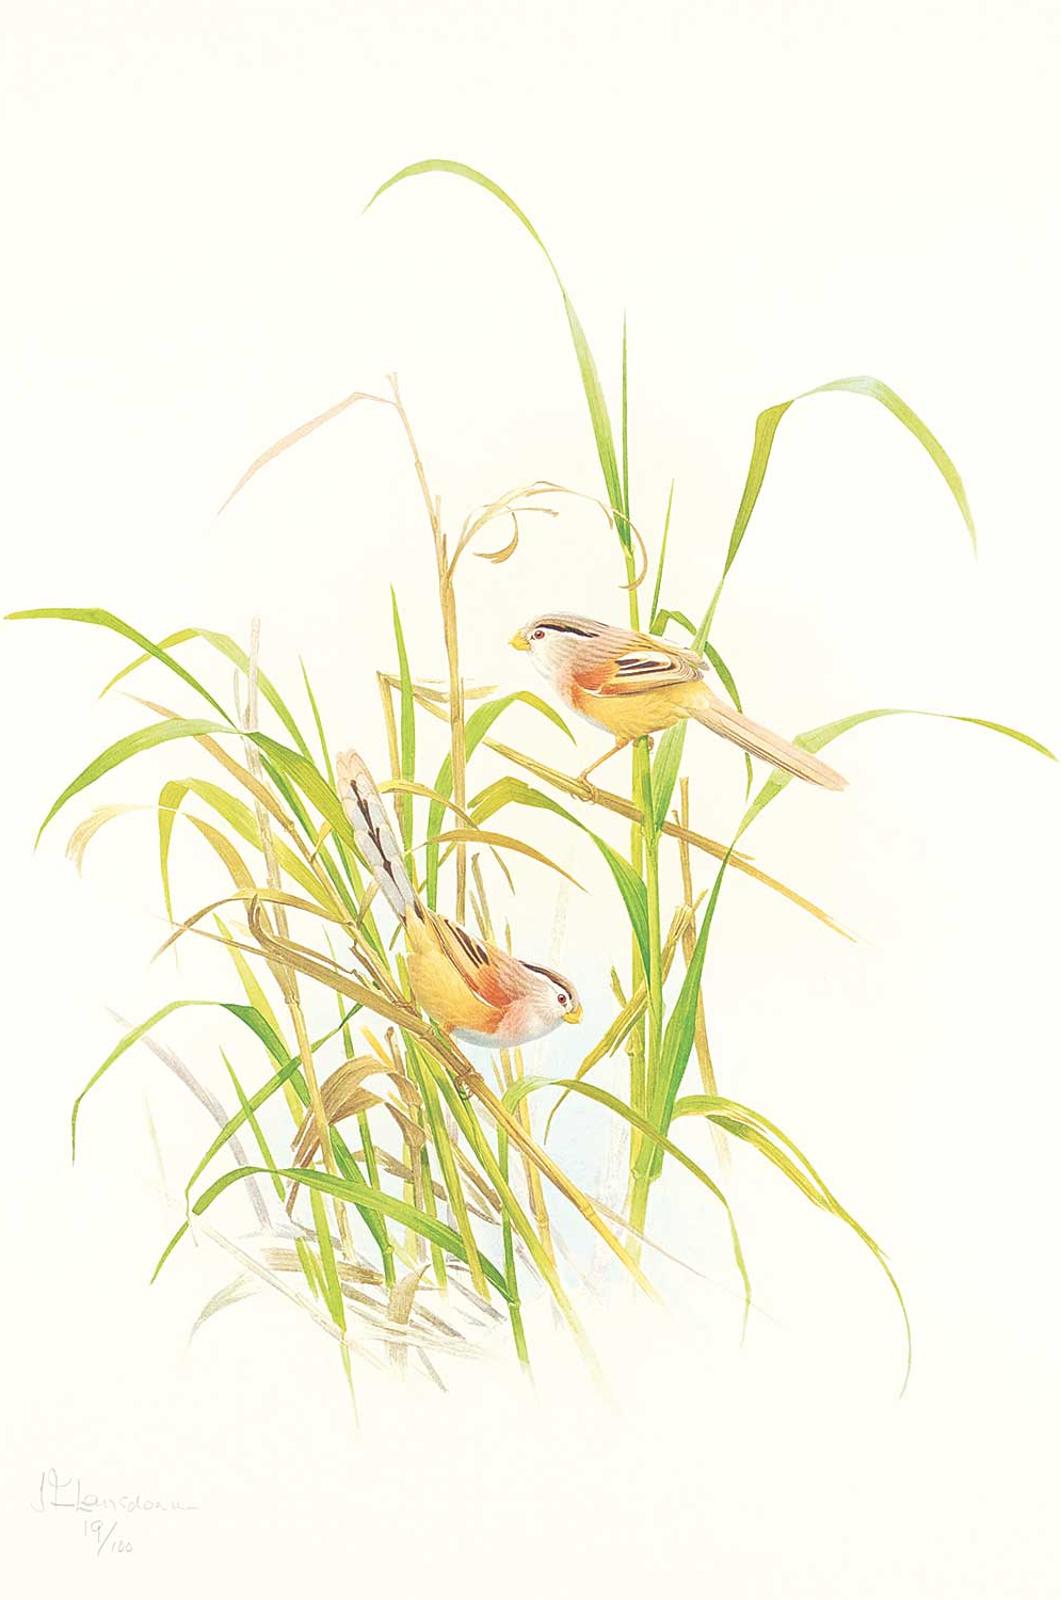 James Fenwick Lansdowne (1937-2008) - Untitled - Birds in the Grass  #19/100